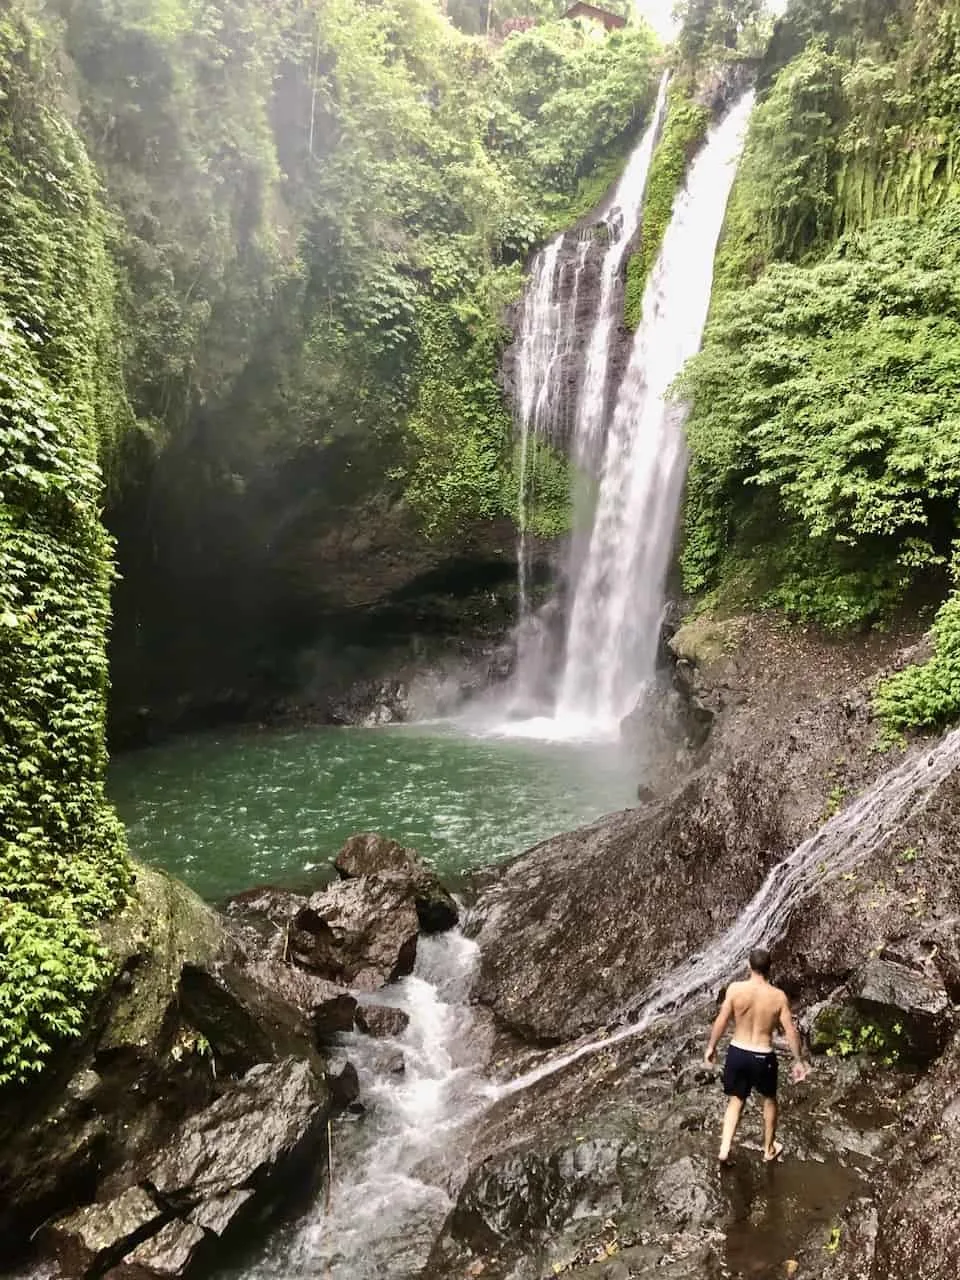 Aling Aling Waterfall Bali